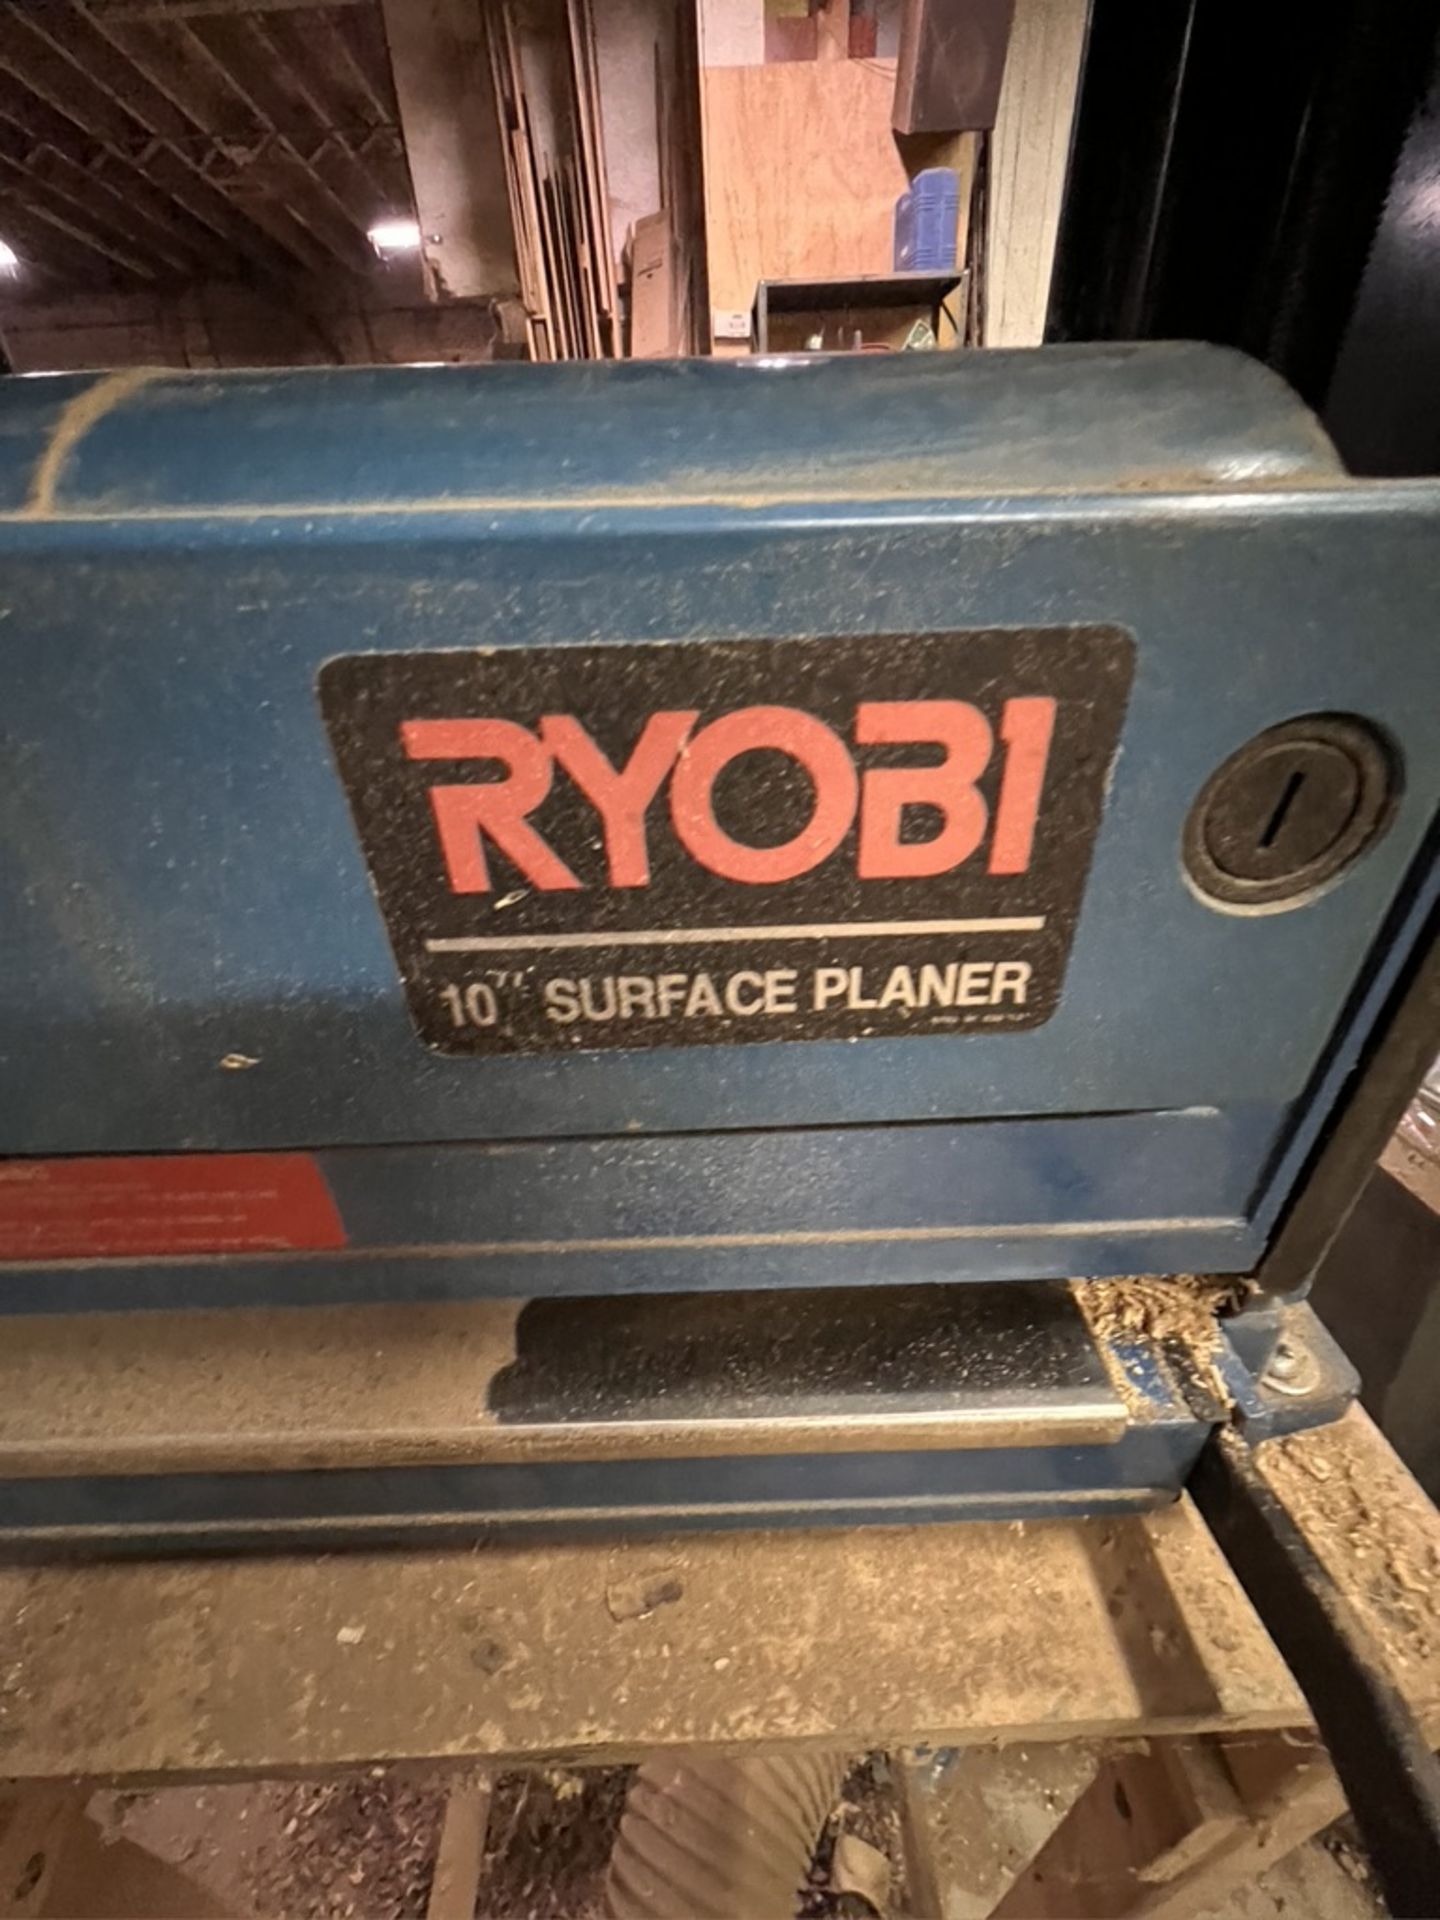 RYOBI 10" SURFACE PLANER, MODEL AP-10, S/N 122551 - Bild 3 aus 5